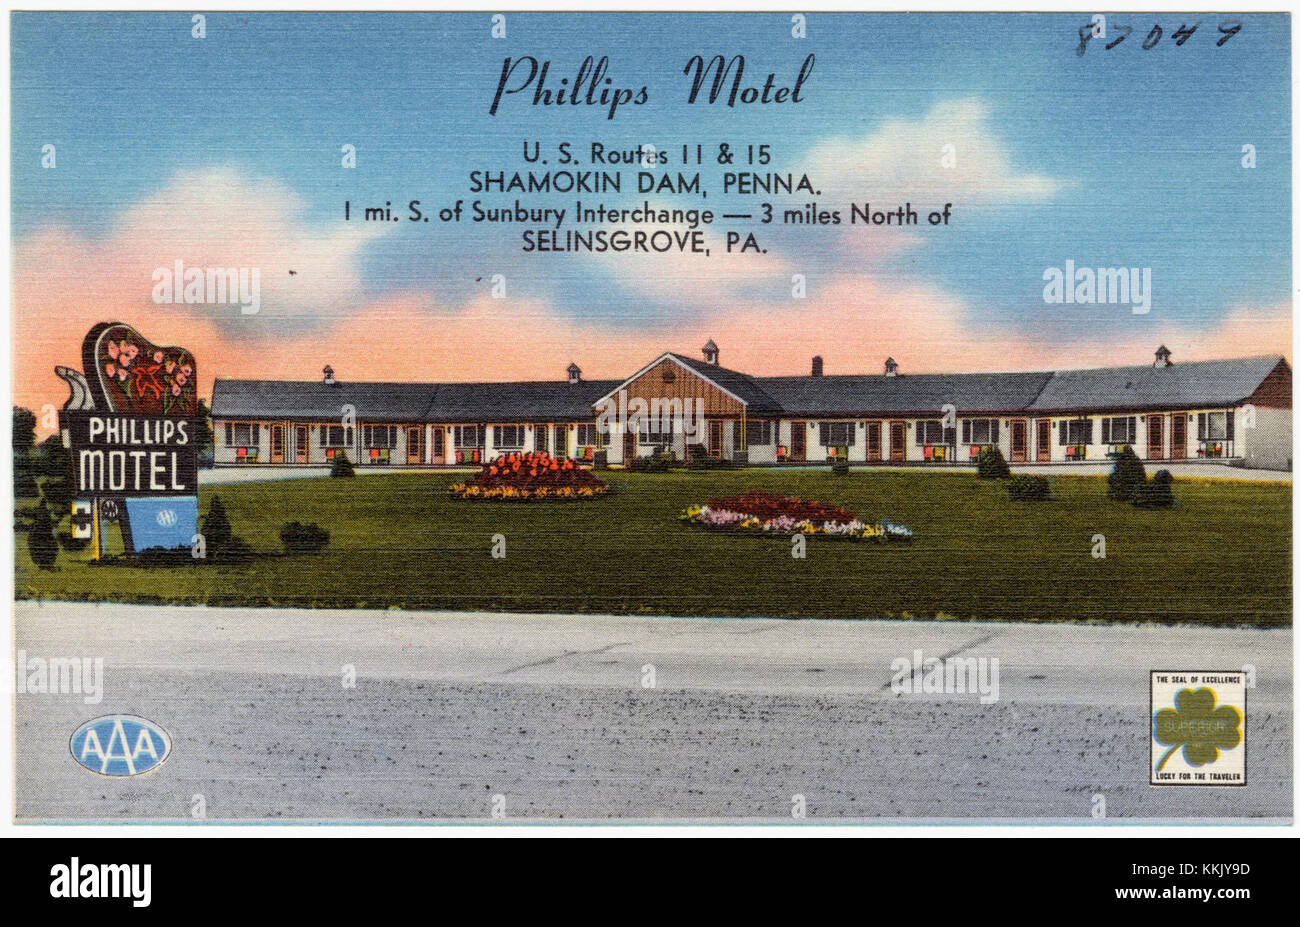 Phillips Motel, U.S. Route 11 and 15, Shamokin Dam, Penna., 1 mi. S. of  Sunbury Interchange -- 3 miles north of Selinsgrove, PA (87049 Stock Photo  - Alamy